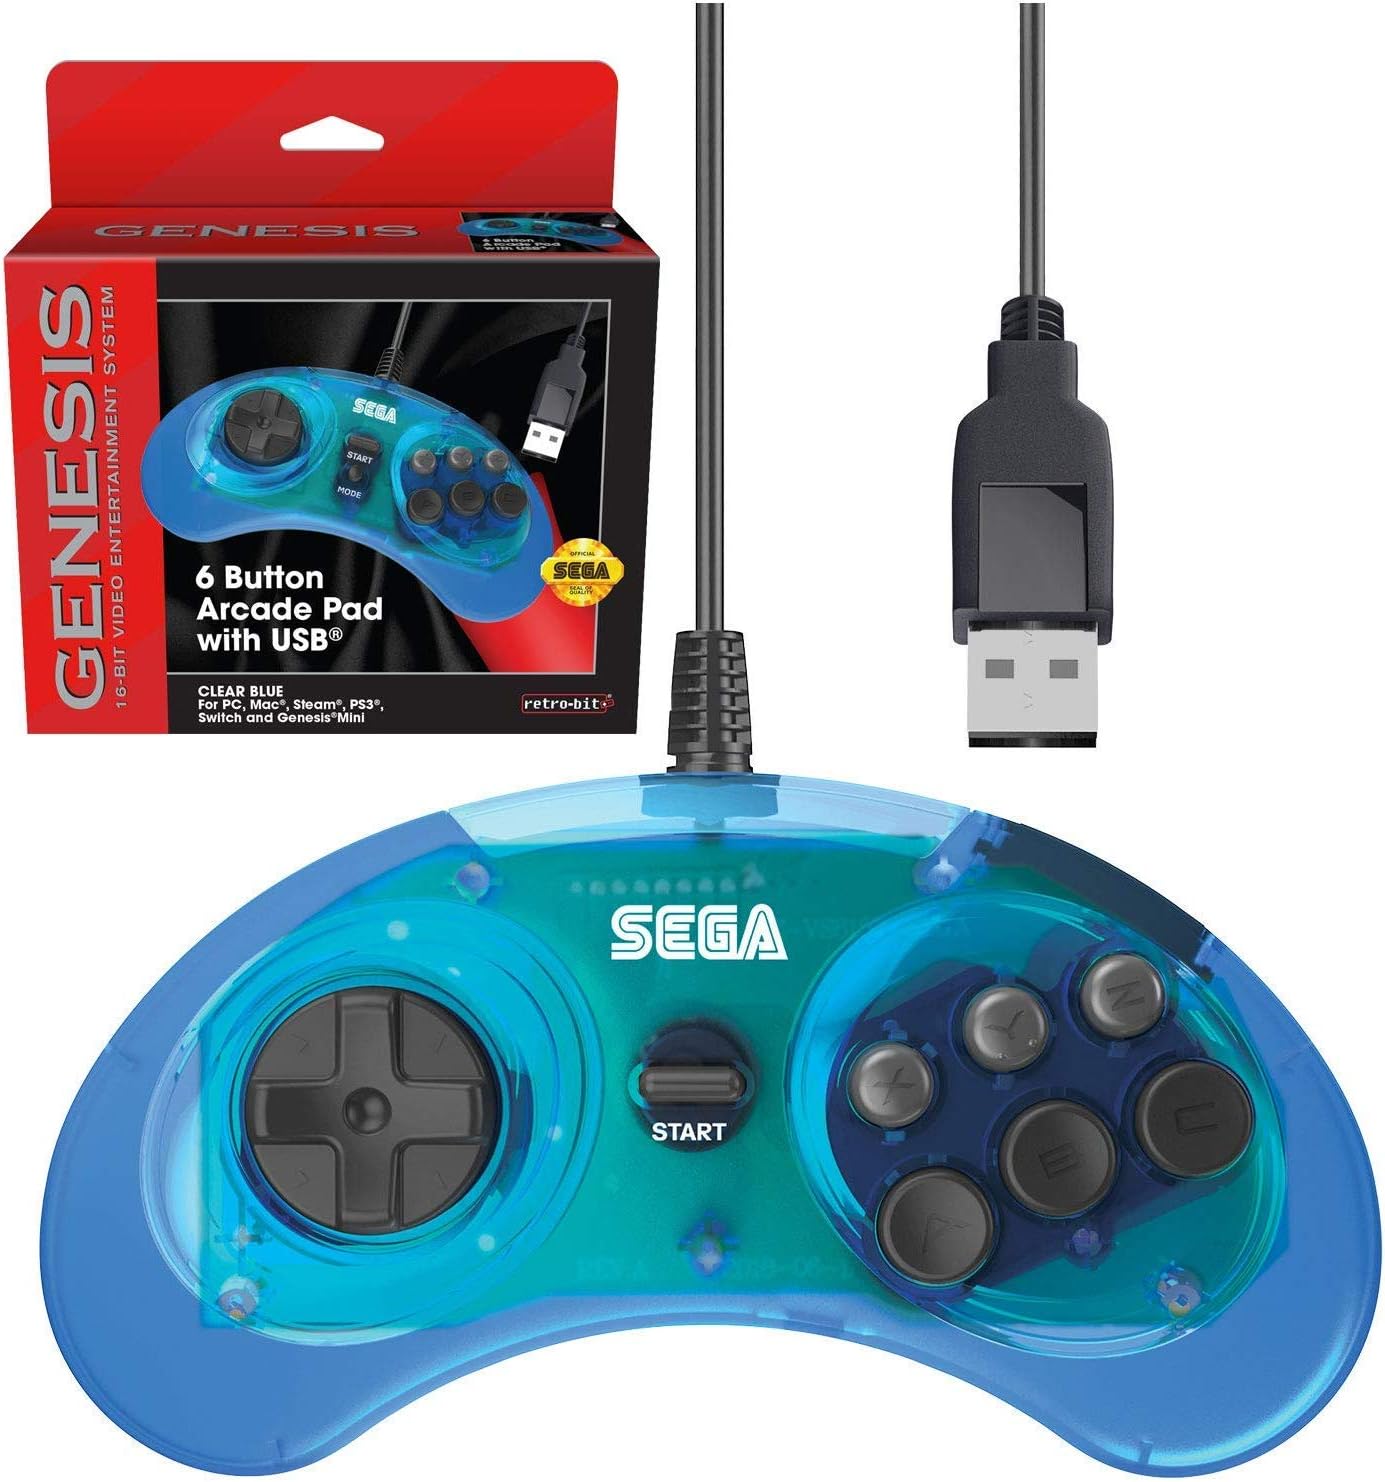 Retro-bit 6 Button USB Arcade Pad Clear Blue (Sega Genesis)